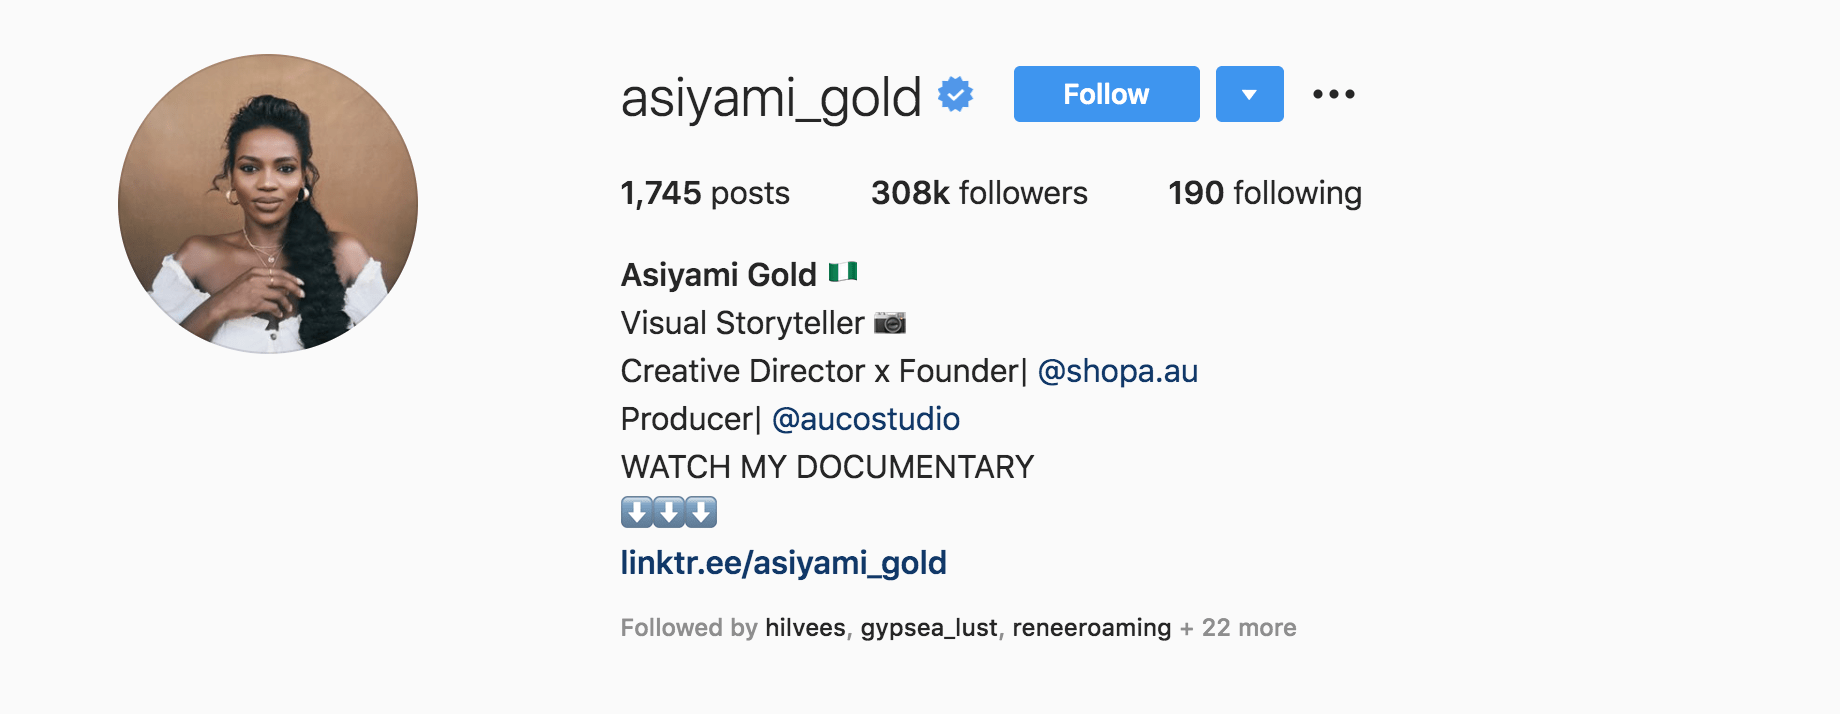 Top Fashion Influencers - Asiyami Gold